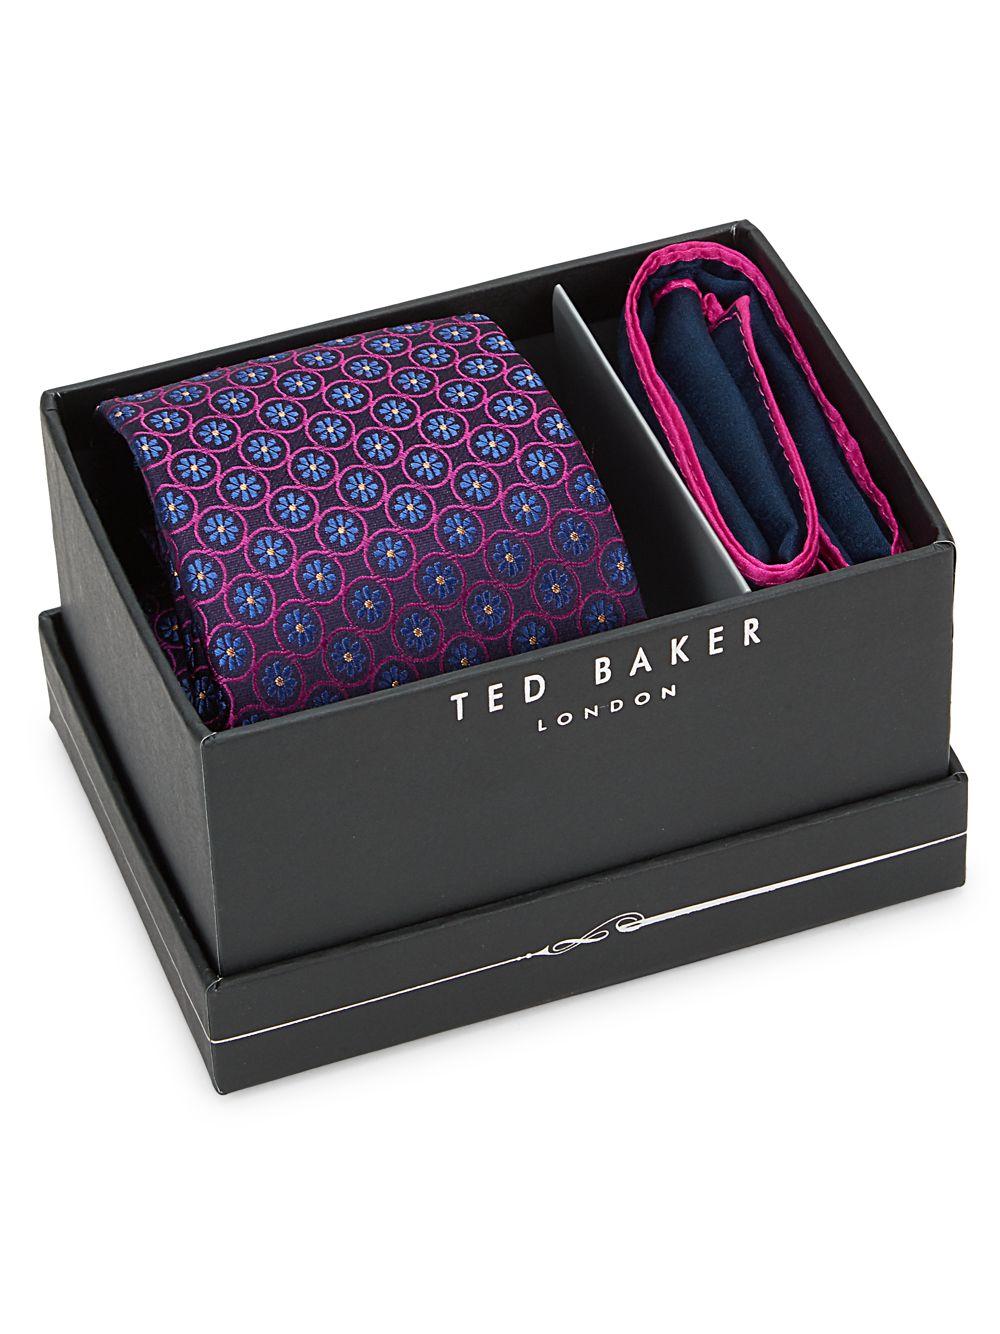 TED BAKER Pocket Square DYAPOK Silk Diamond Print Black Handkerchief BNWT RP£29 